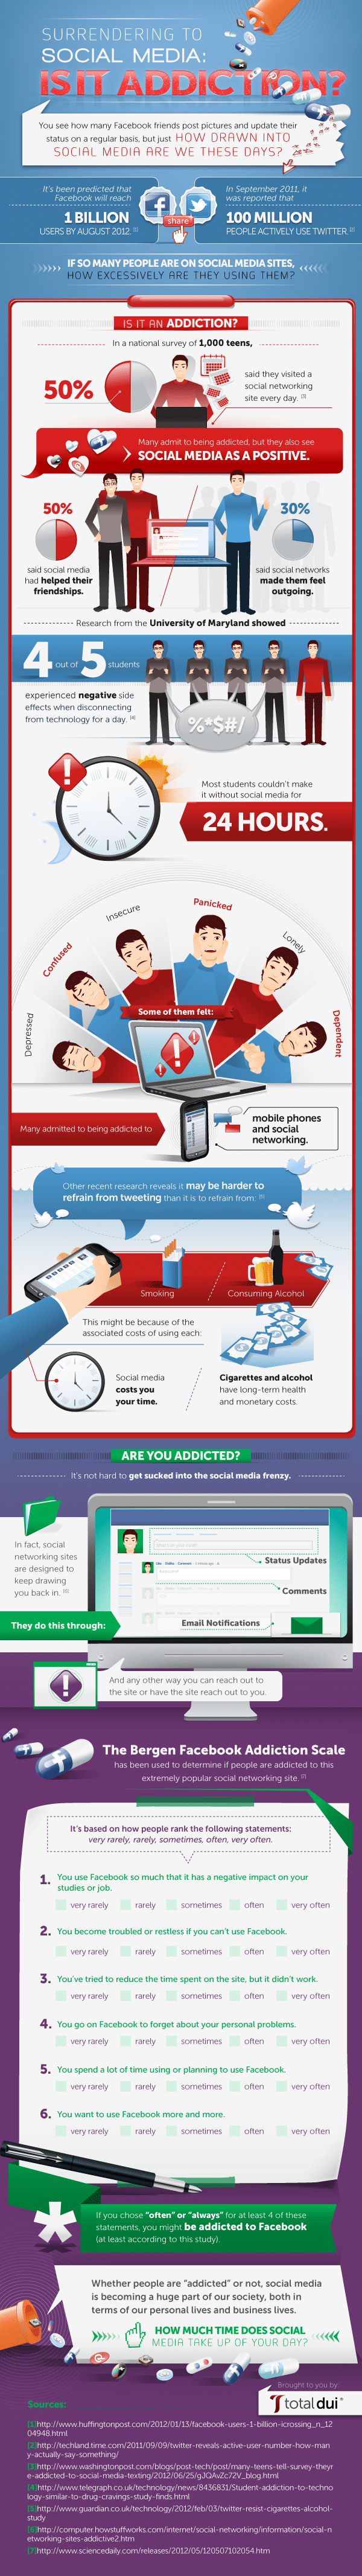 social-media-addiction-explained-infographic